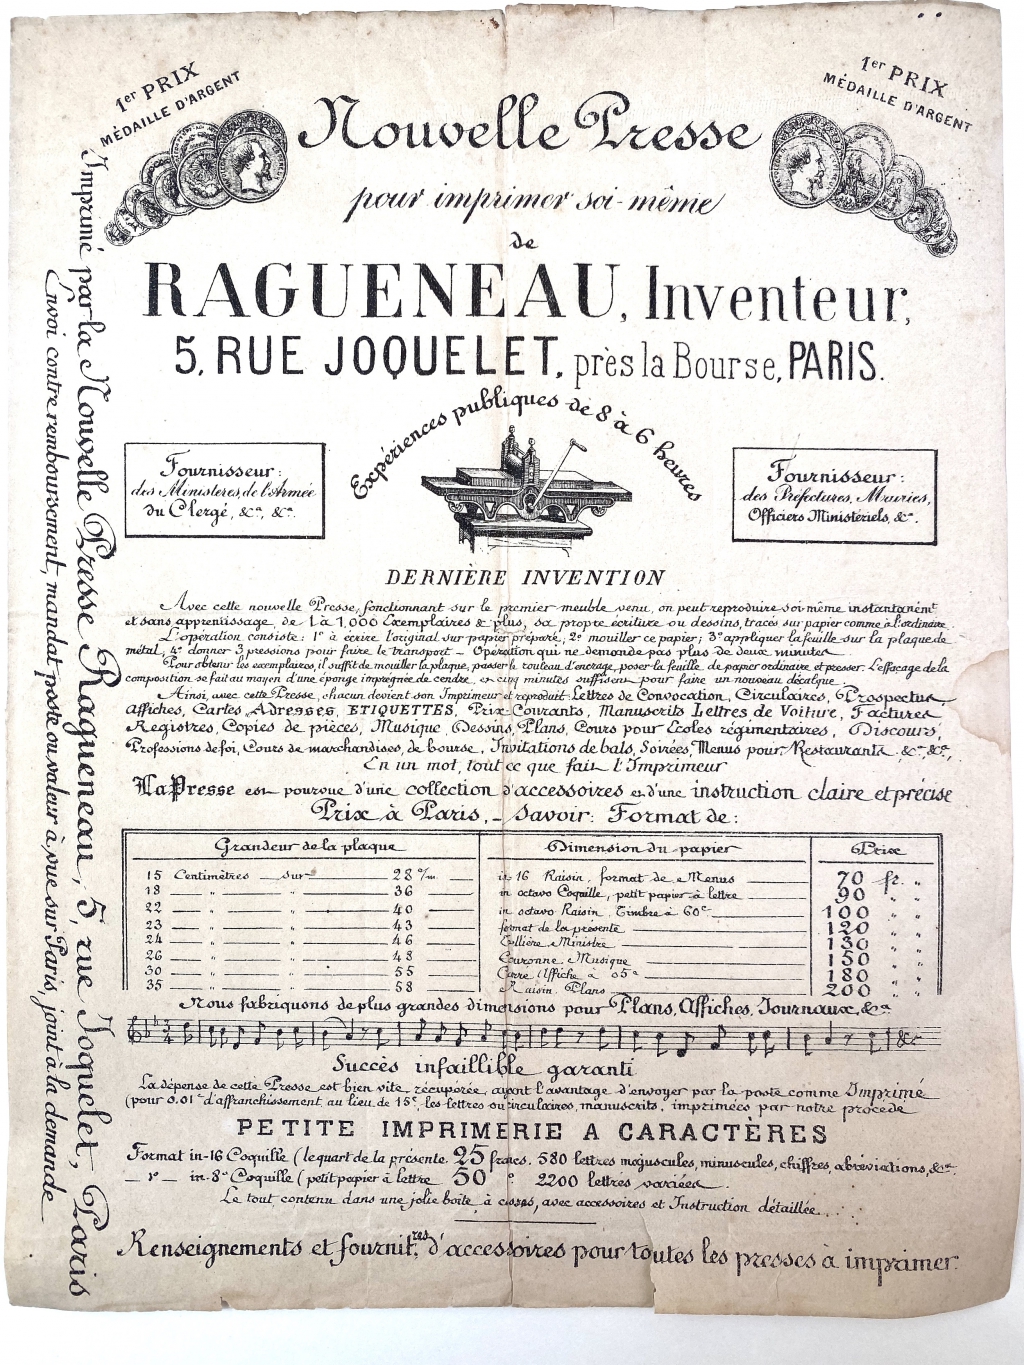 Ad for Ragueneau copying press